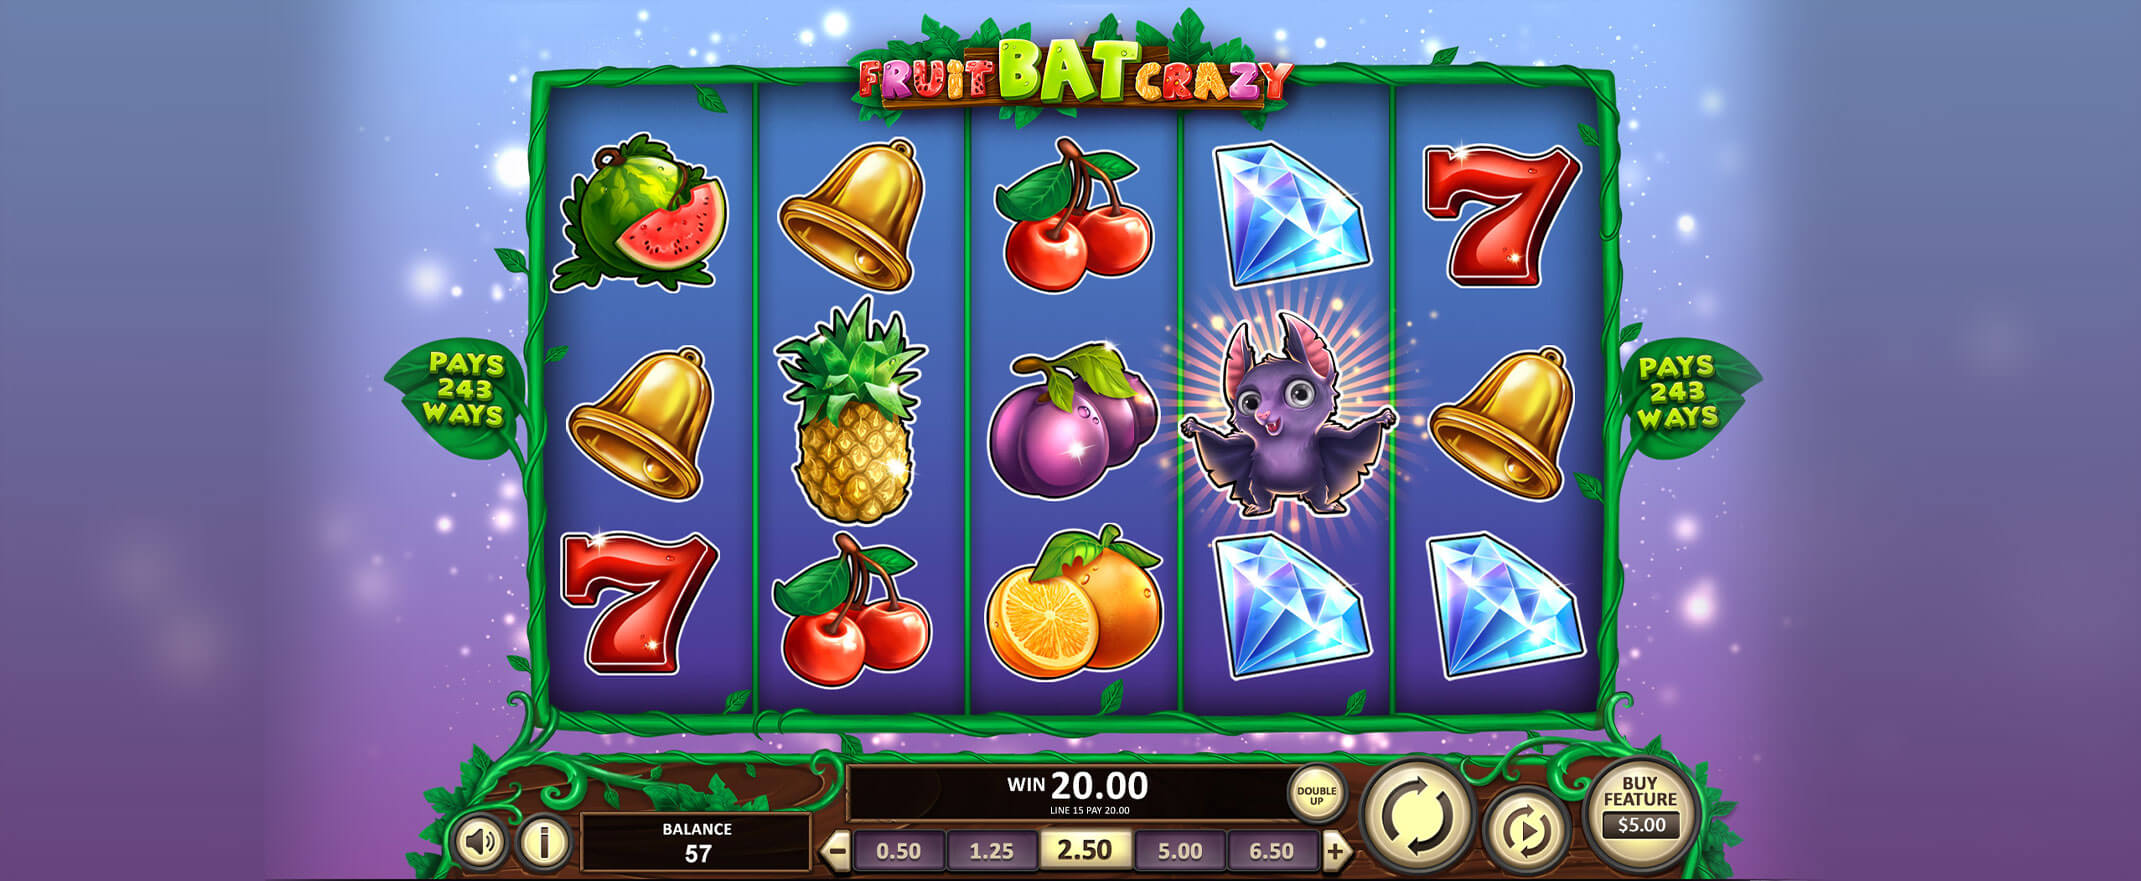 Fruit Bat Crazy Spielautomat von Betsoft